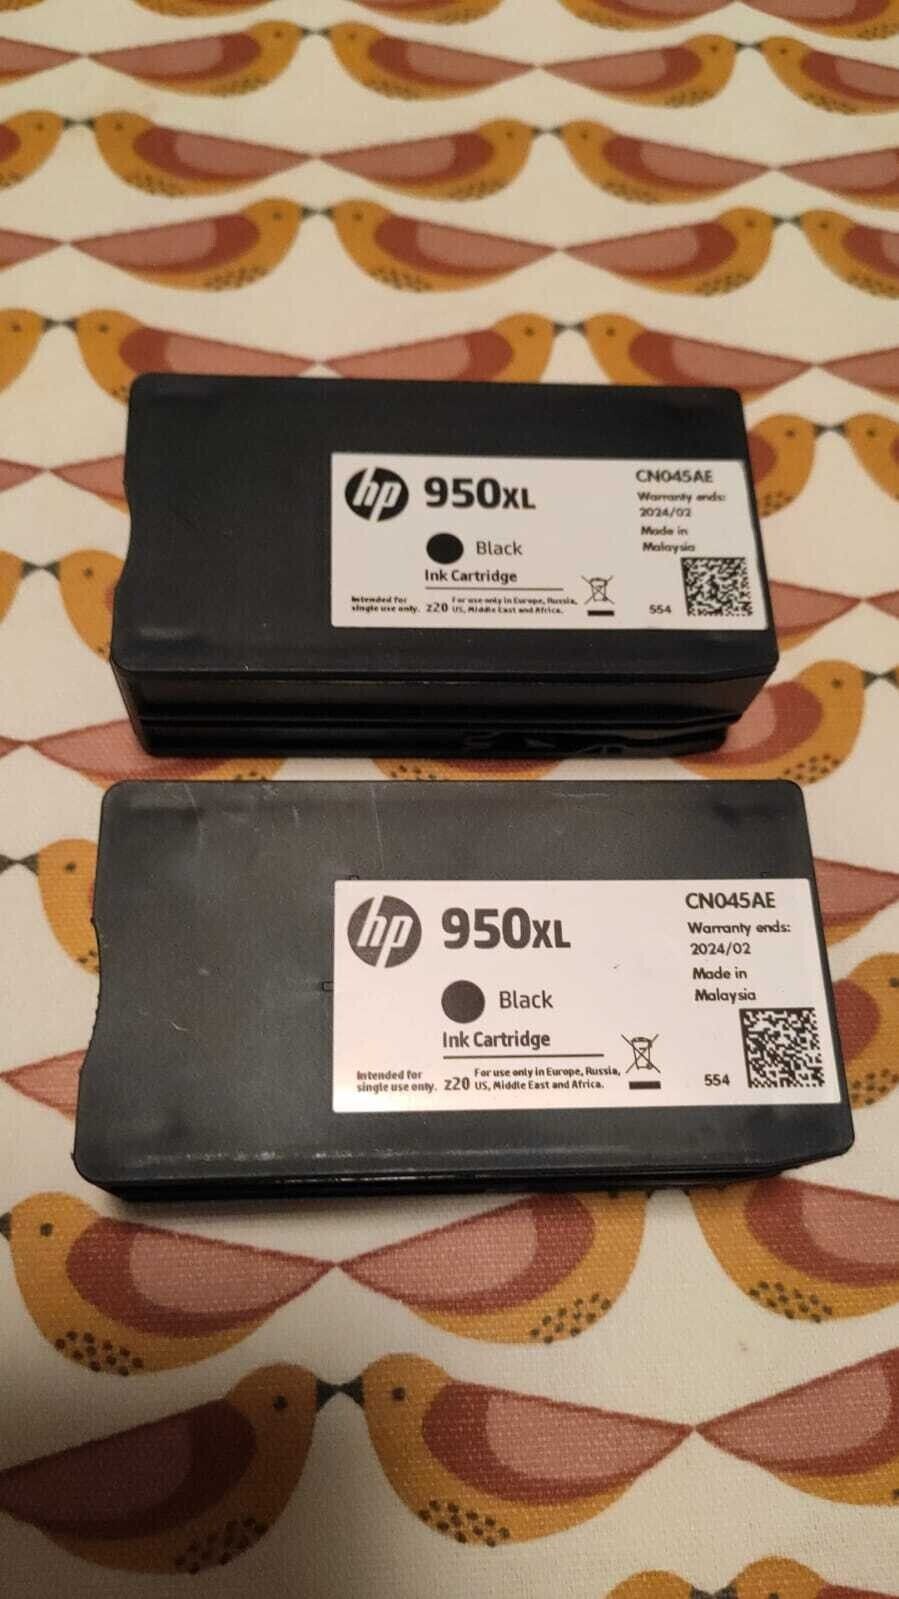 2x Genuine HP 950XL Black ink cartridges (NO BOX) - CN045AE - FREE UK DELIVERY!